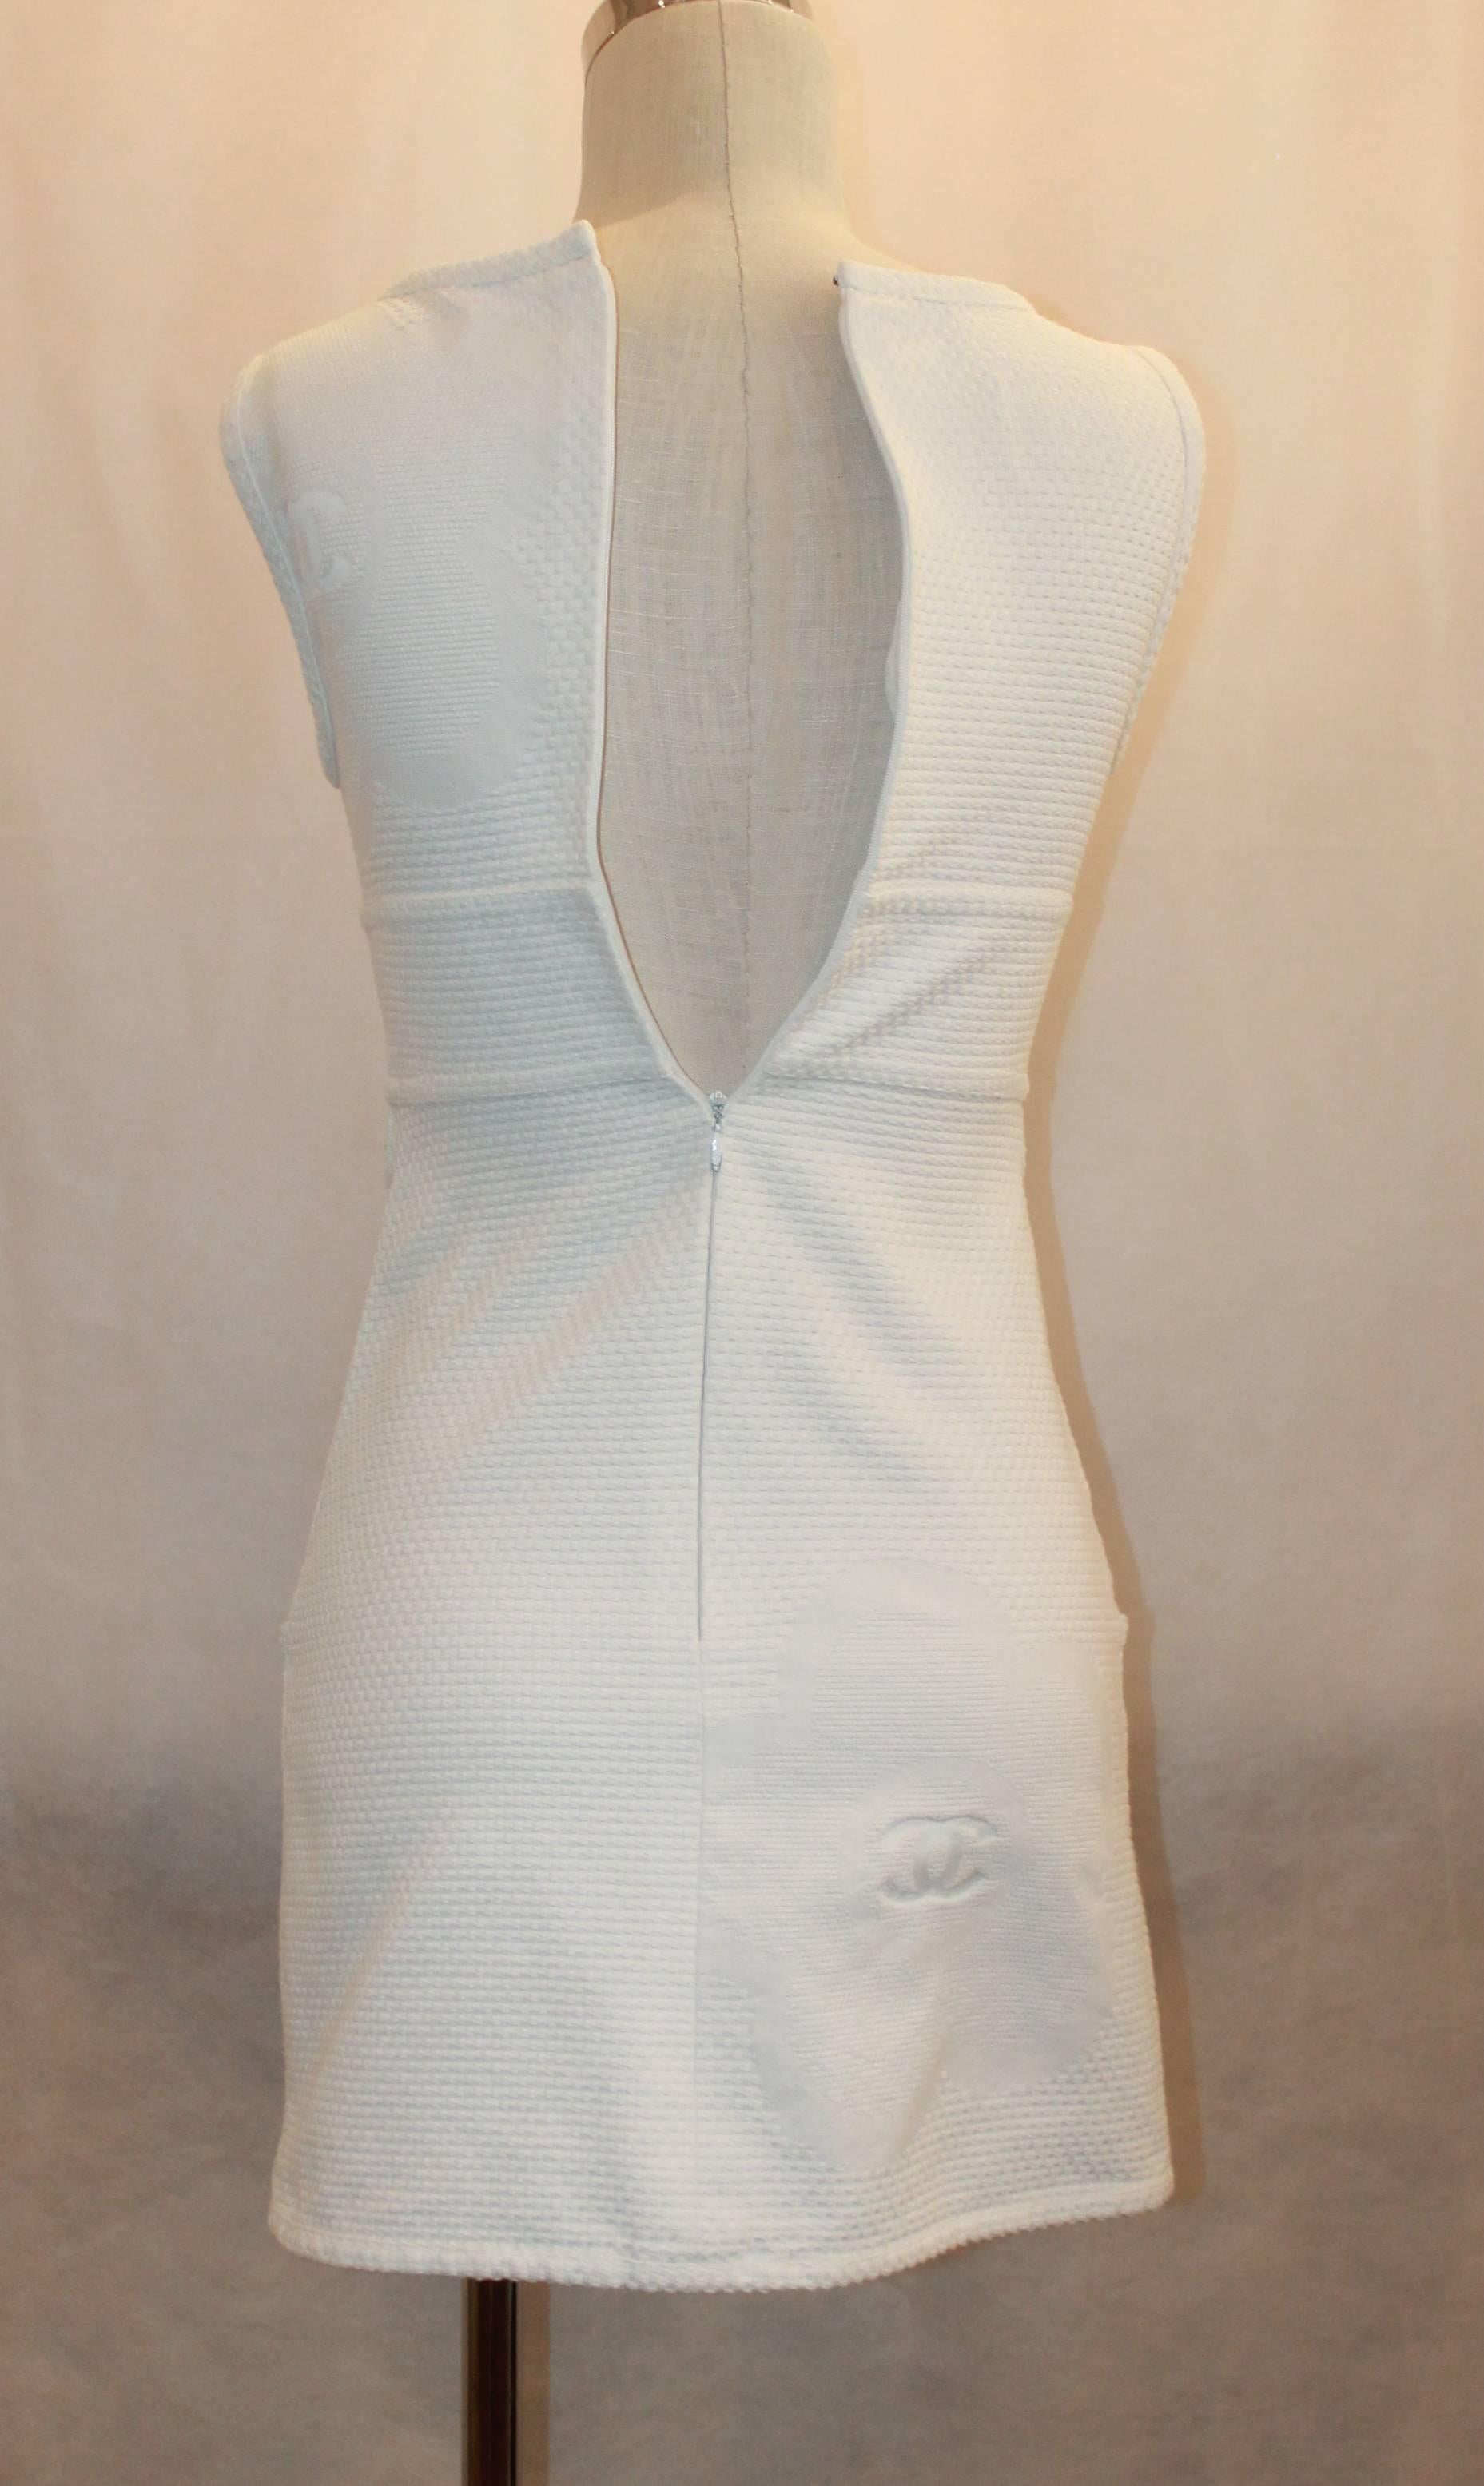 Gray Chanel White Cotton Sleeveless Mini Dress with Pockets - 34 - 09P